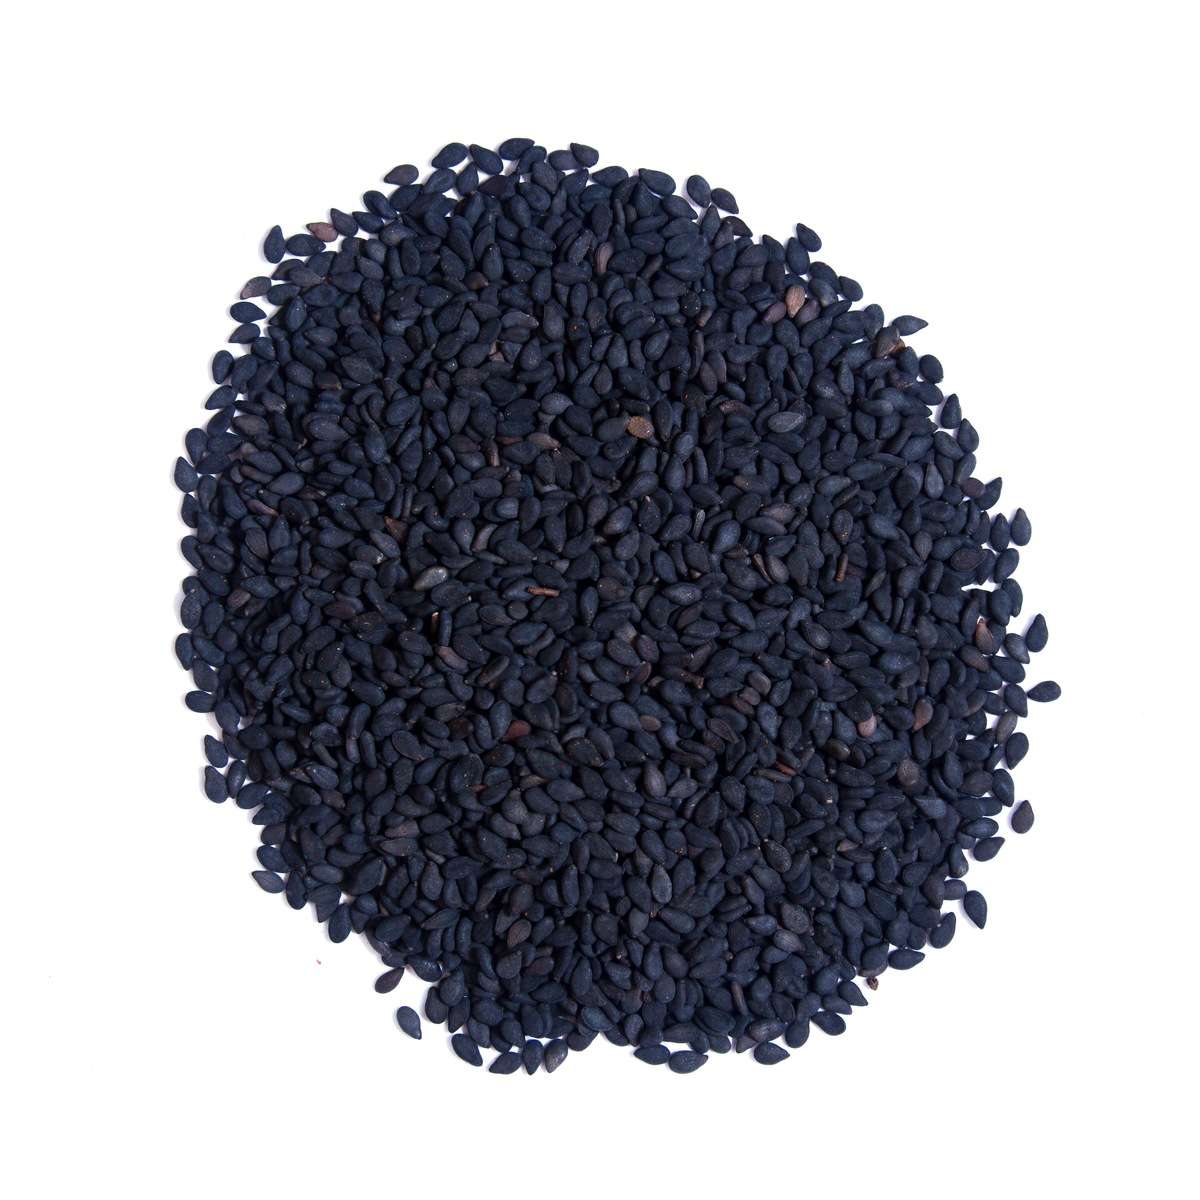 True Organic Black Sesame Seeds Prepack (250g)